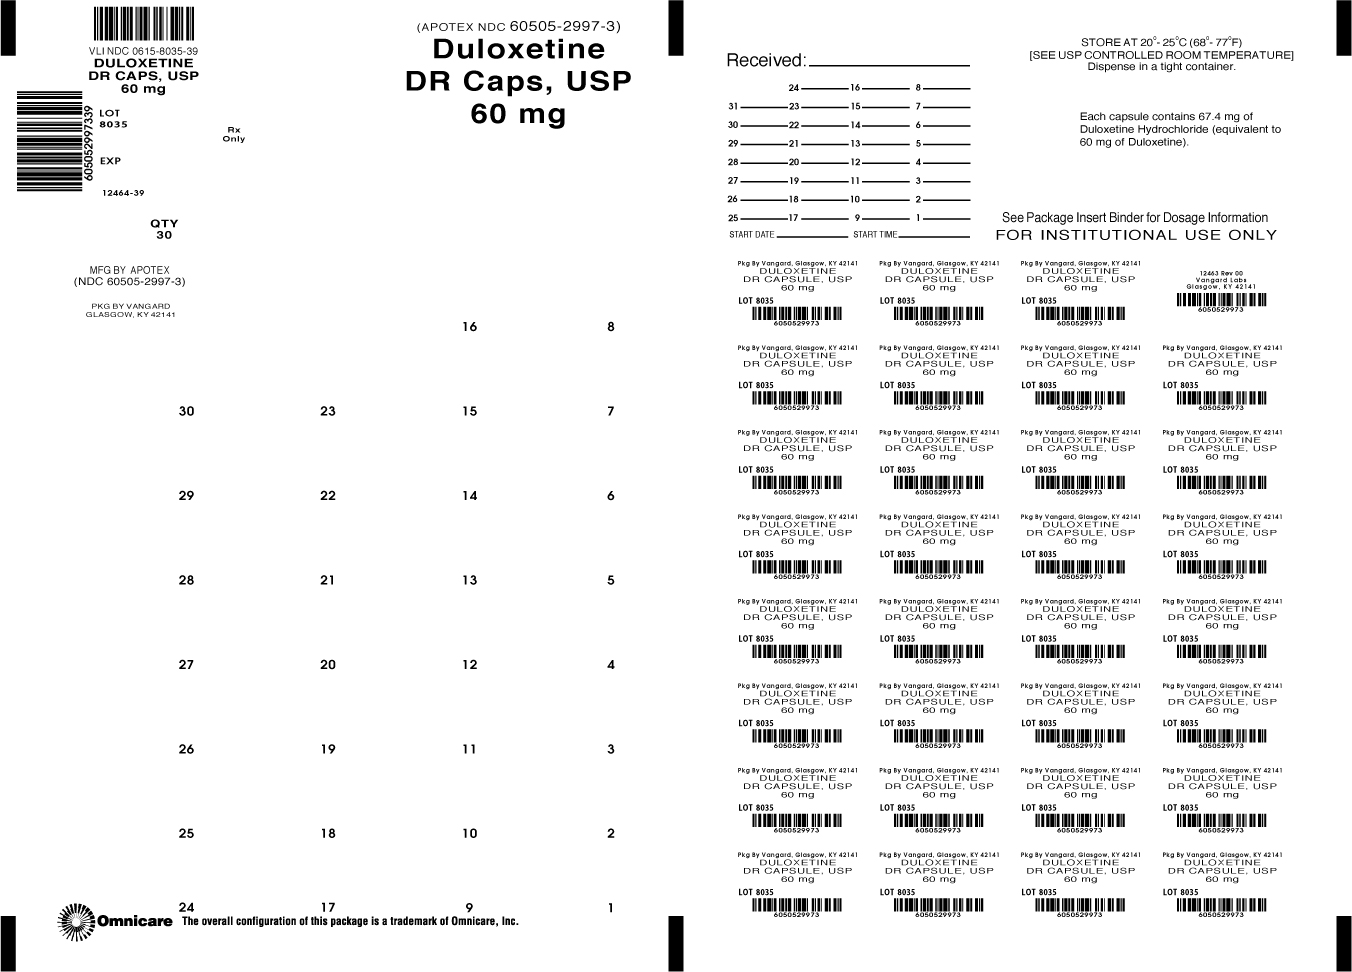 Duloxetine DR Caps, USP 60mg bingo card label